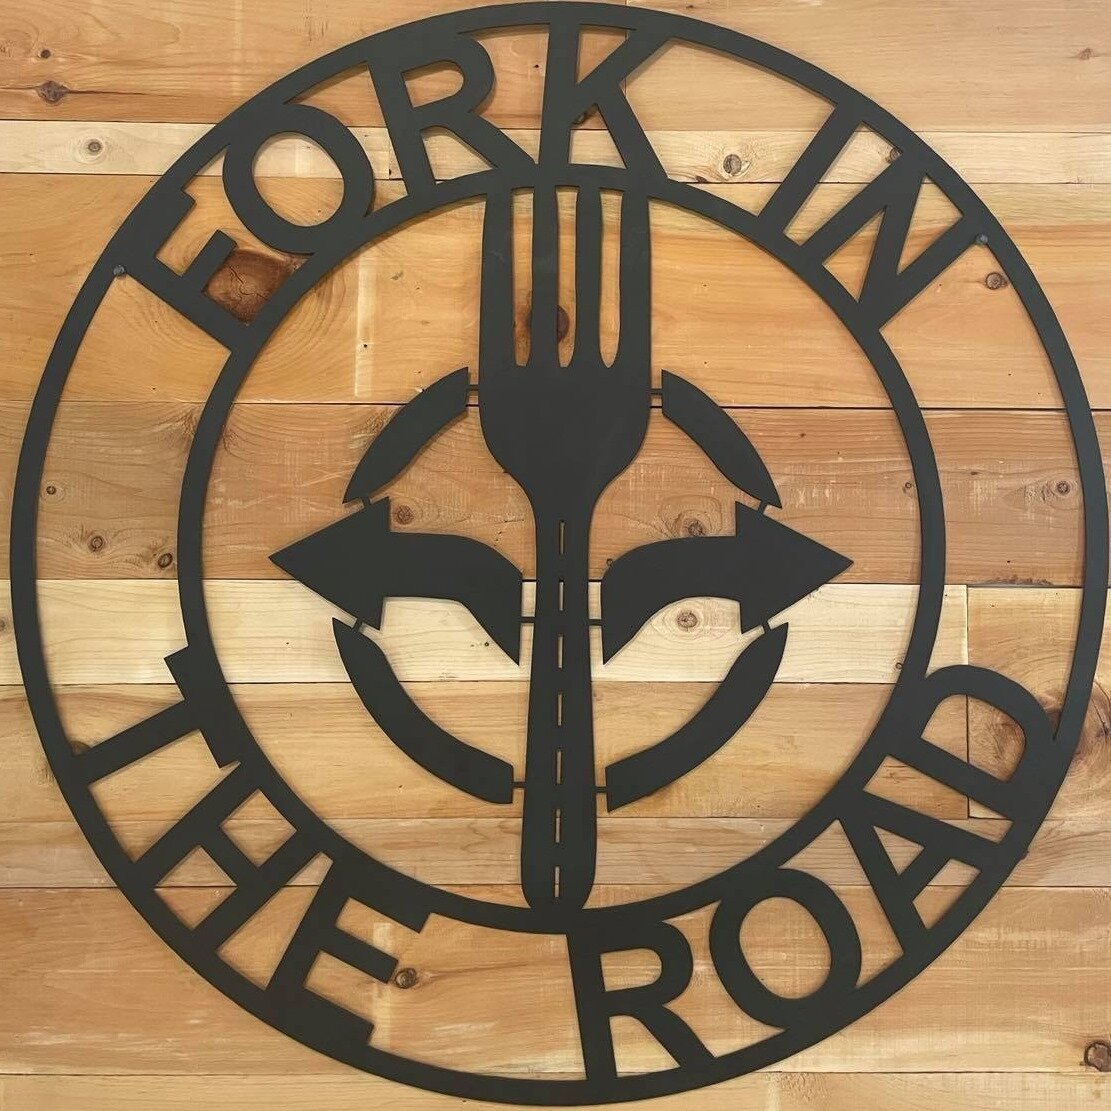 Fork in the road logo.jpg